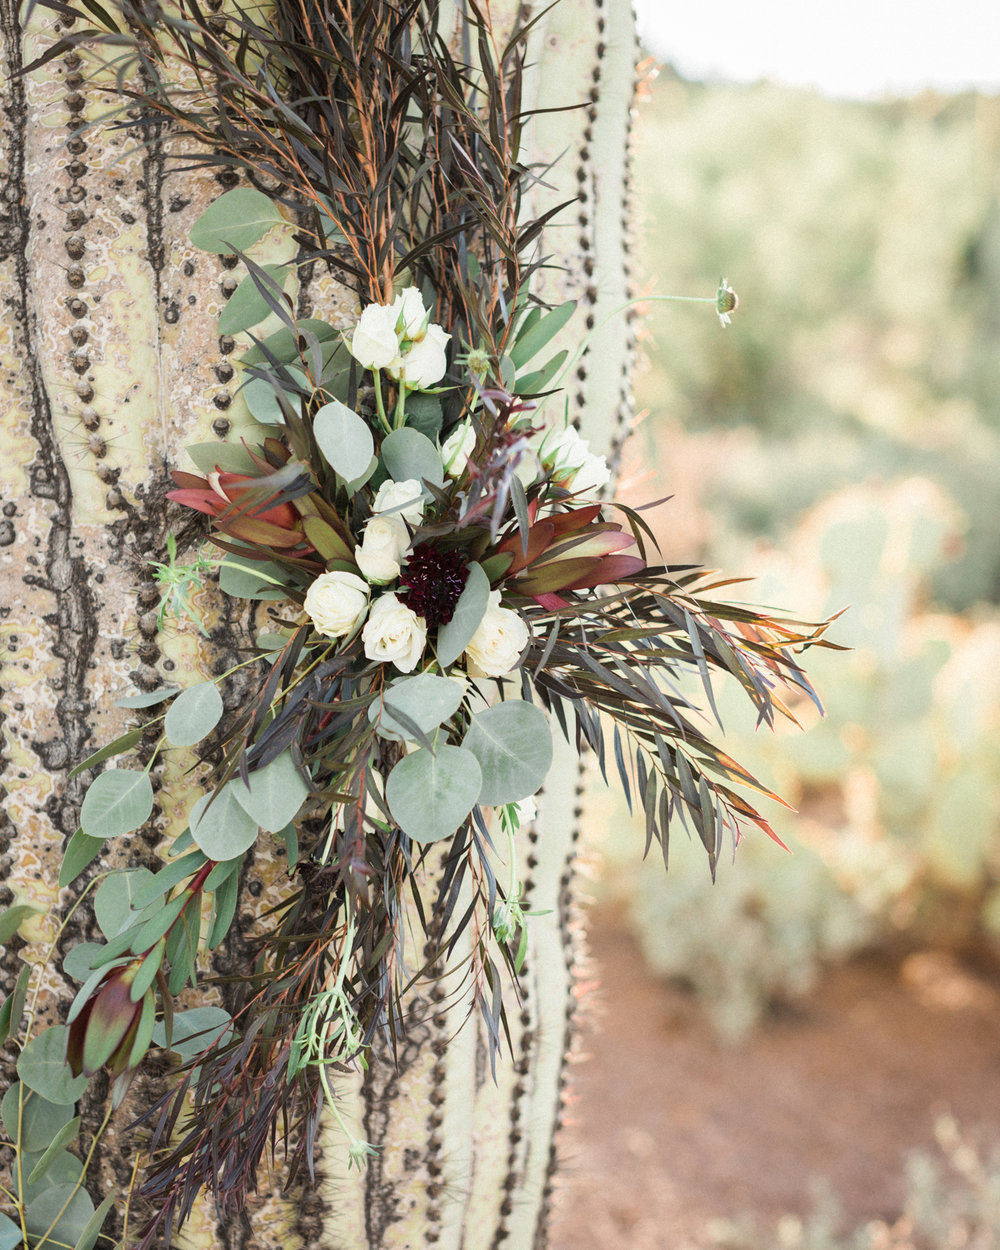  Saguaro cactus floral installation 